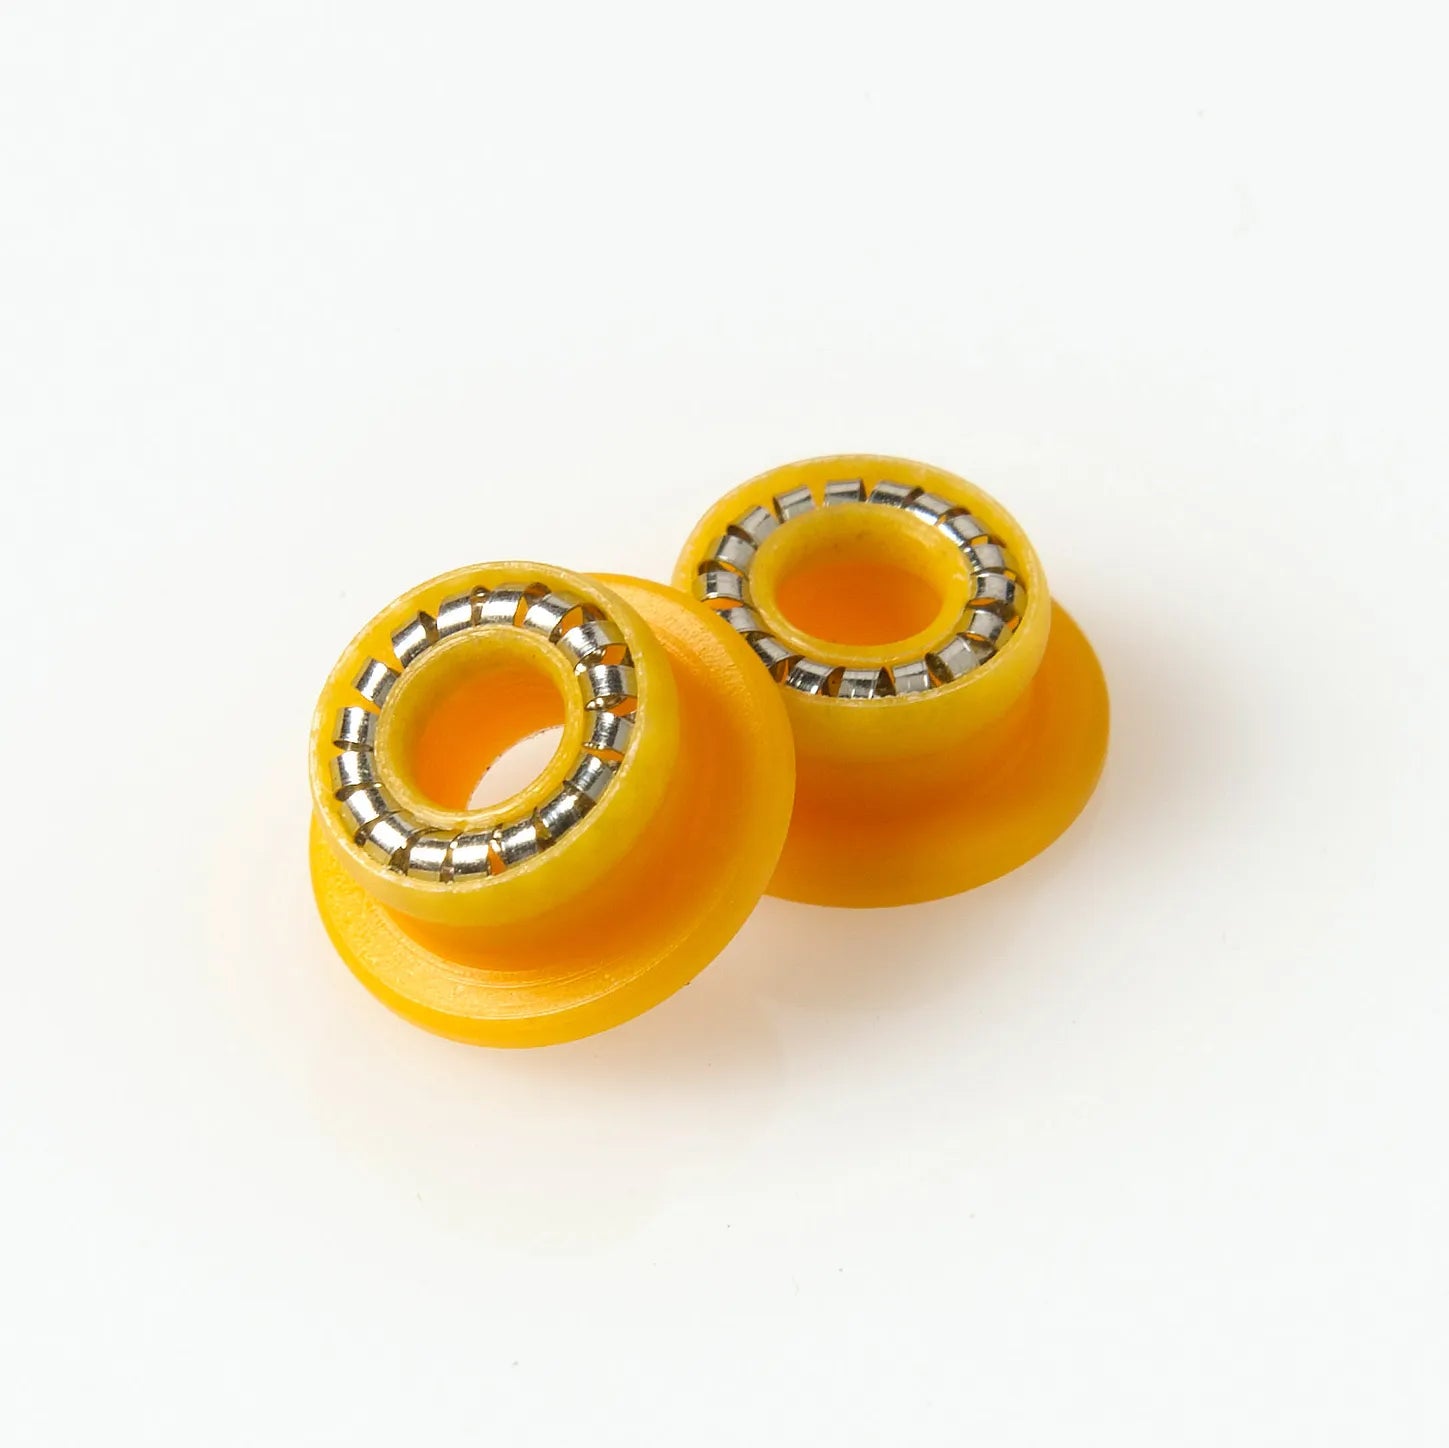 Gold Piston Seals, 2/pk, Comparable to Agilent # 0905-1420